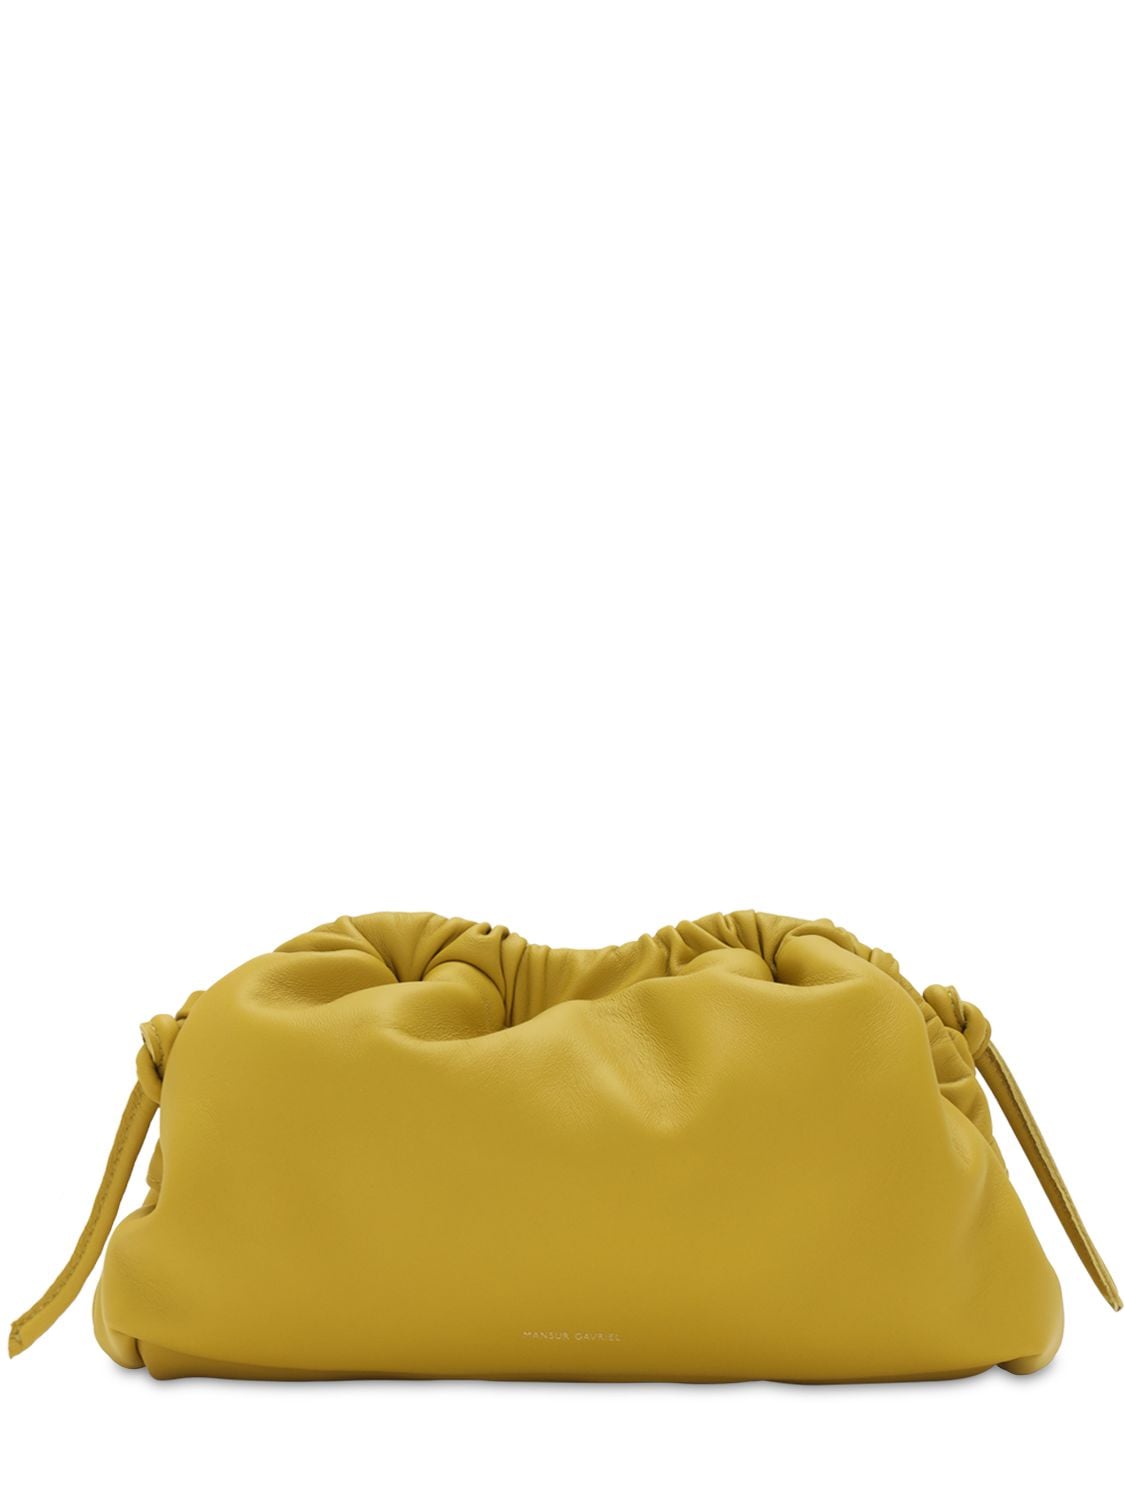 Mansur Gavriel Mini Cloud Leather Clutch In Yellow | ModeSens